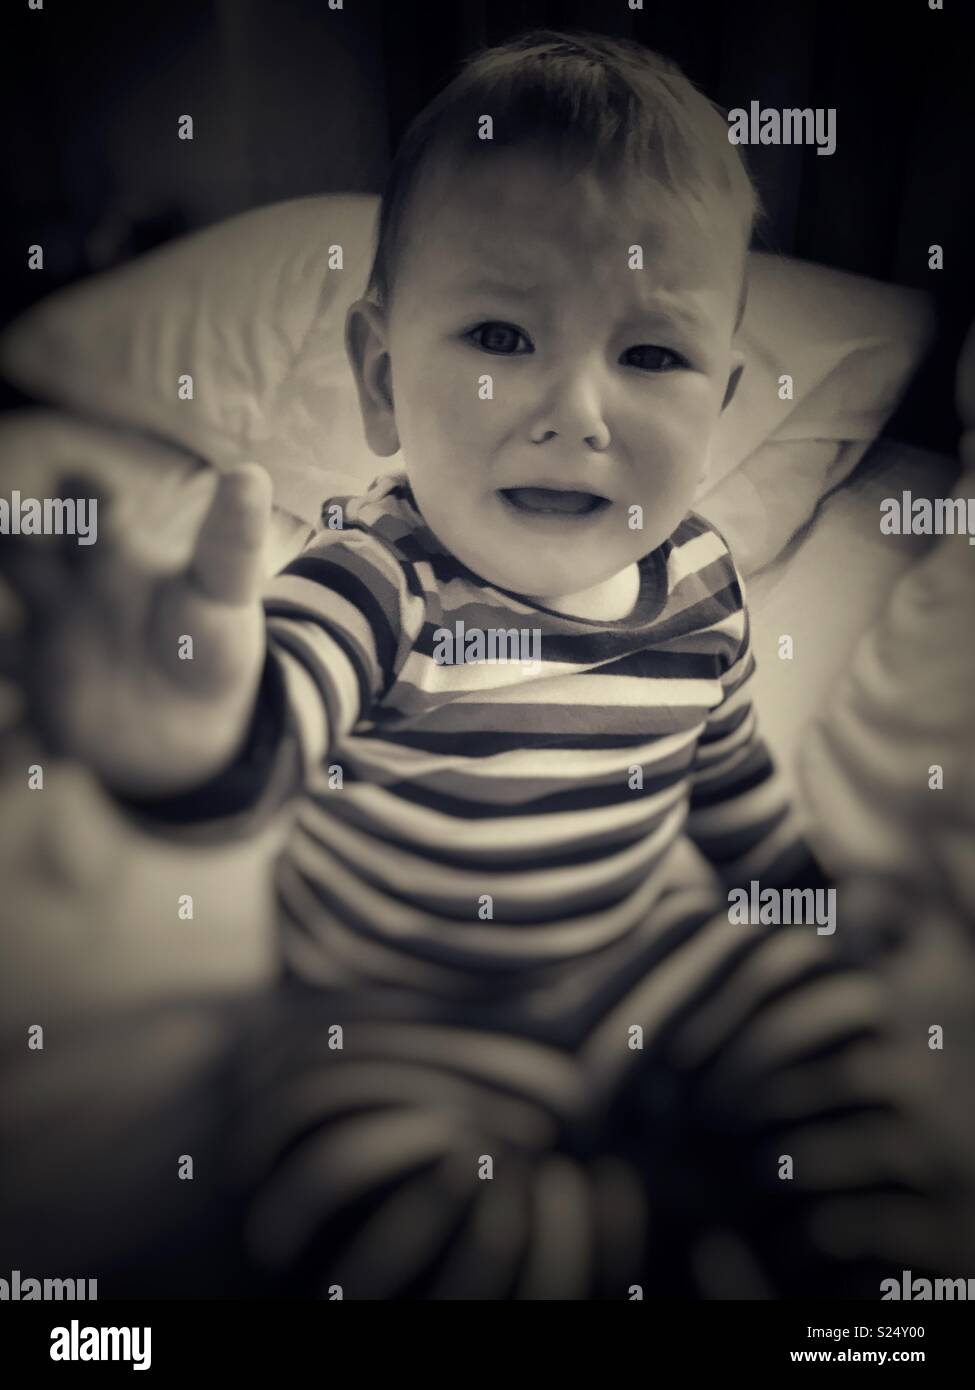 Toddler crying Stock Photo